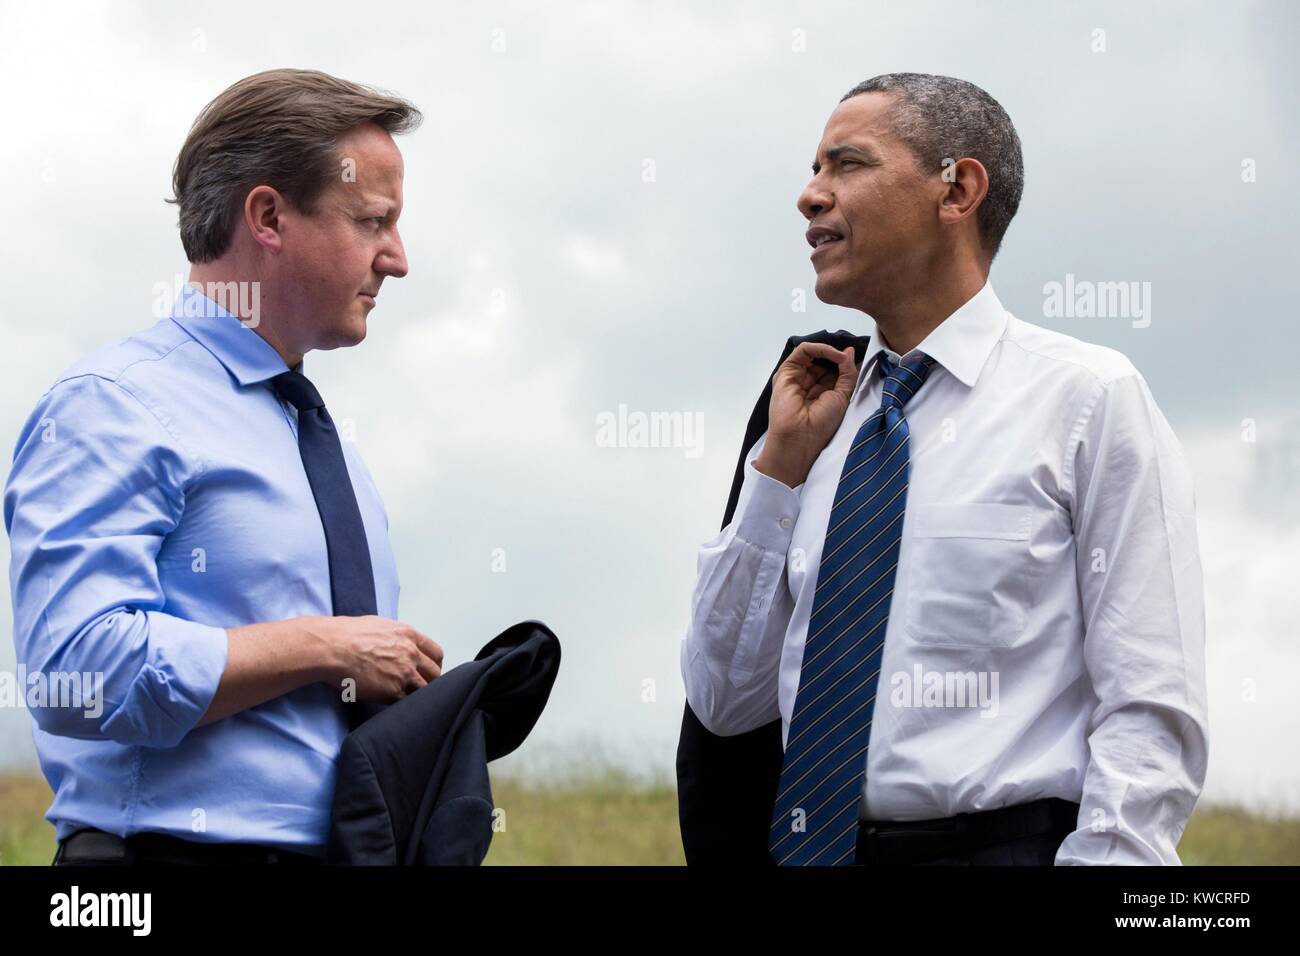 President Barack Obama and Prime Minister David Cameron at the G8 Summit. Lough Erne Resort in Enniskillen, Northern Ireland, June 17, 2013. (BSLOC 2015 3 212) Stock Photo